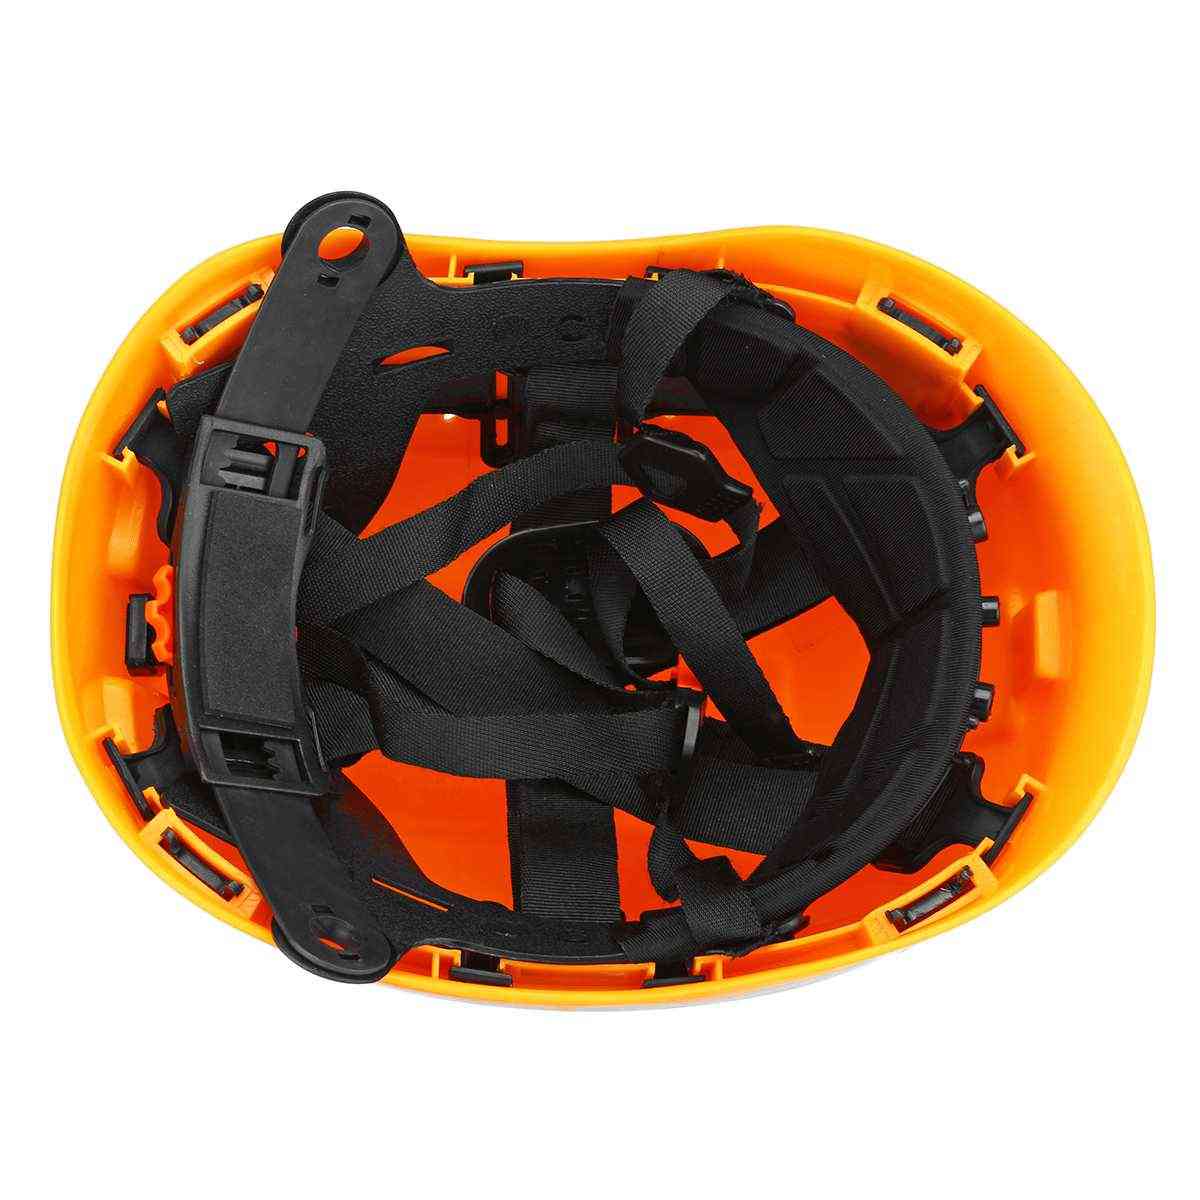 Safety Helmet Construction, Climbing, Steeplejack  Protective, Hard Hat